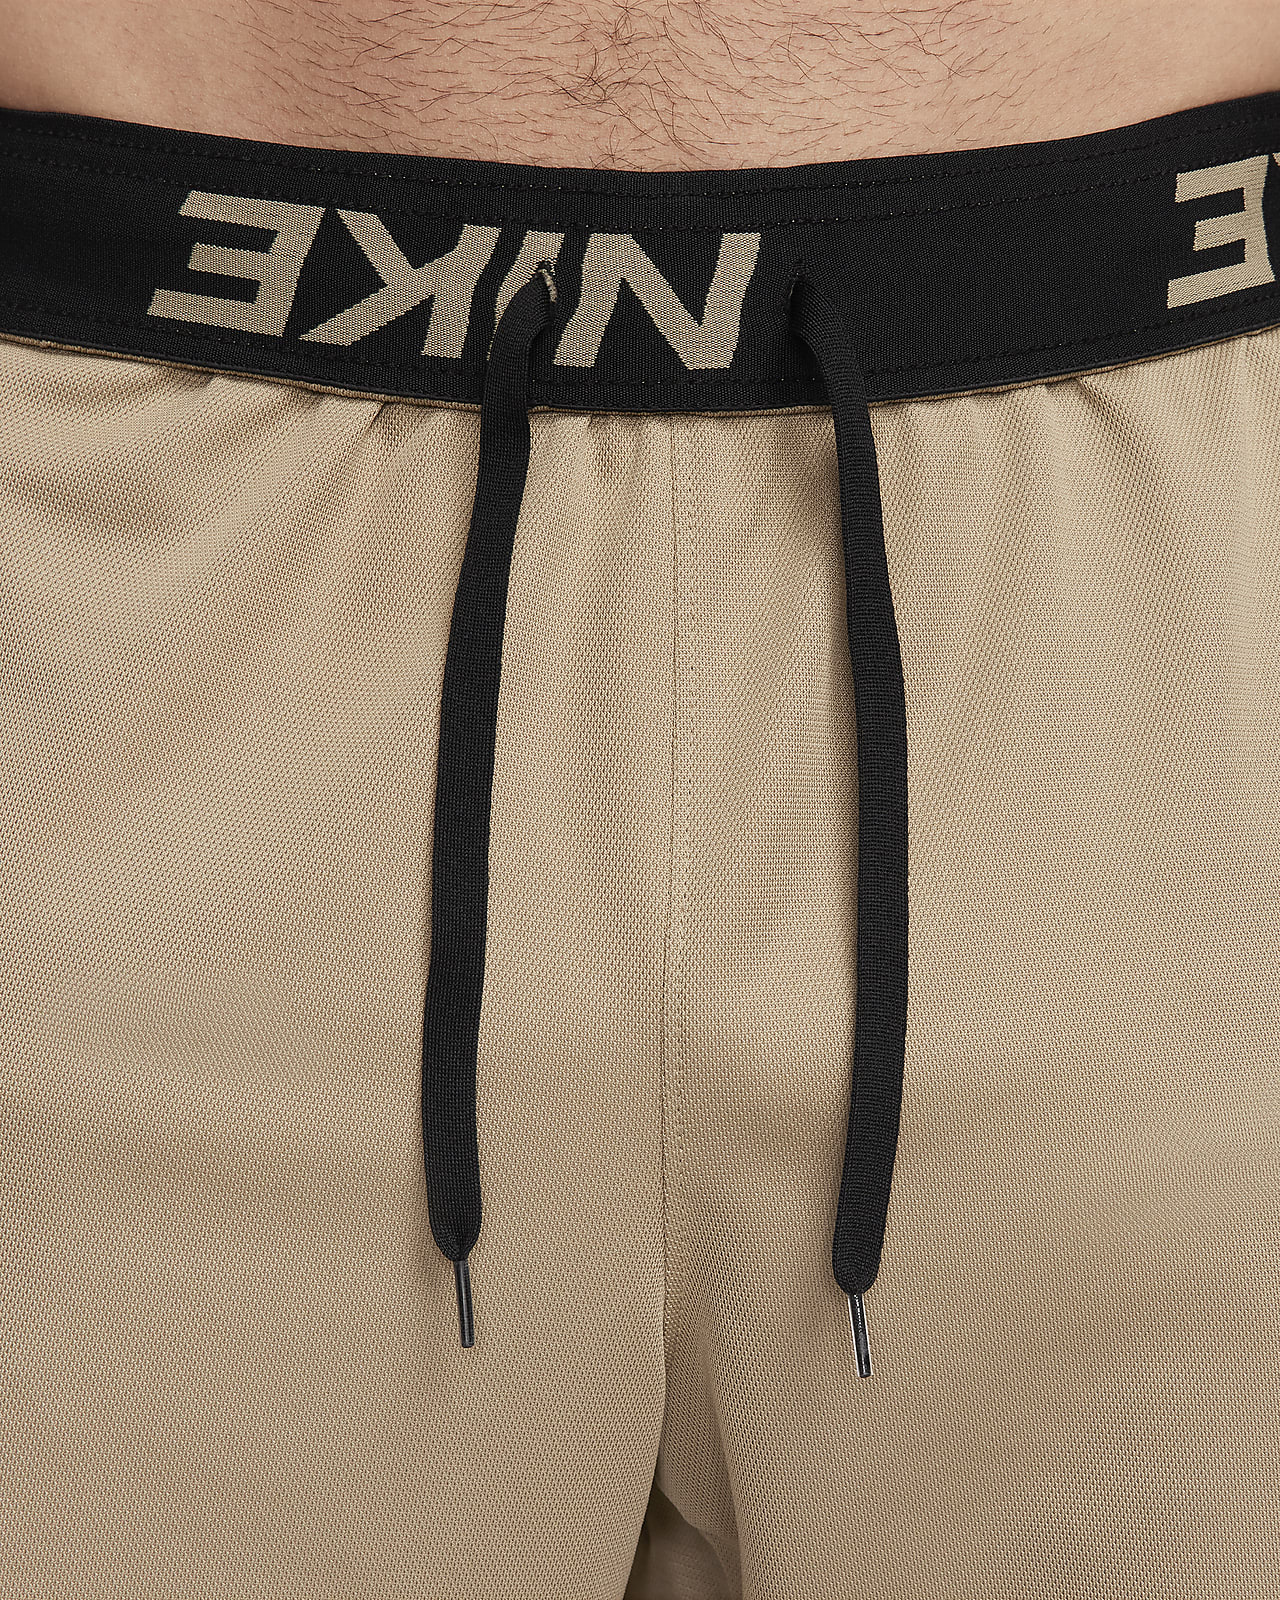 Nike Dri-FIT Epic Luxe Tight Shorts W - DM7574-011 – Dynamic Sports